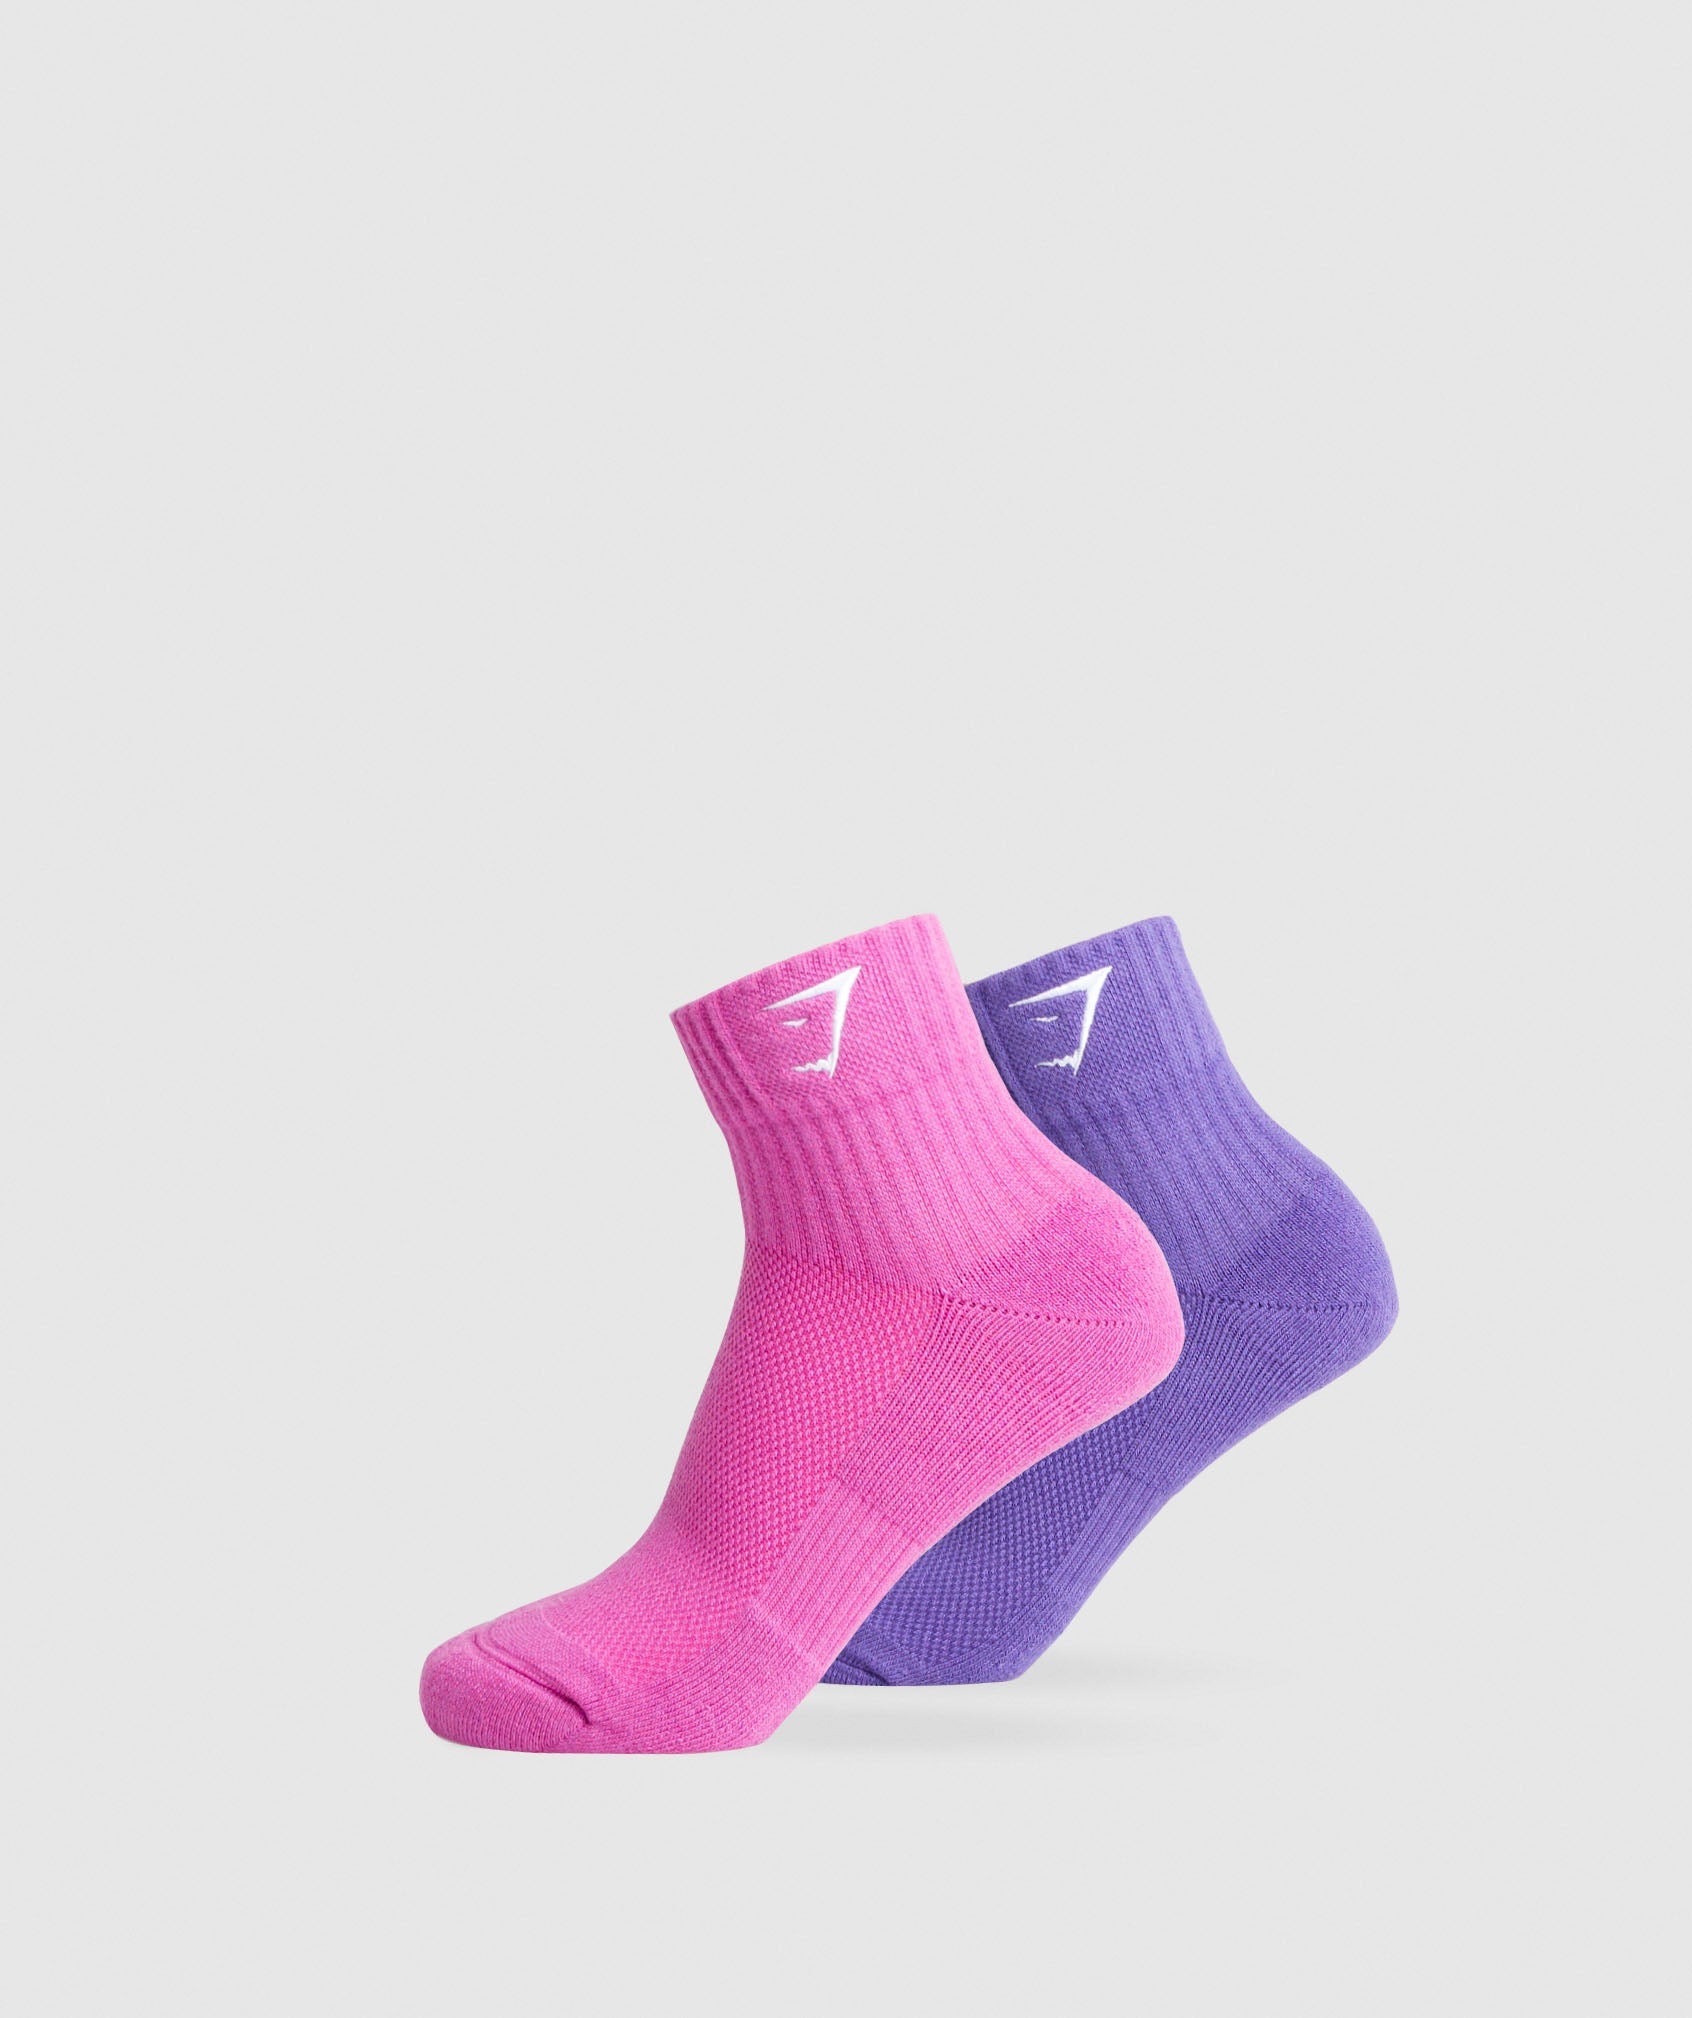 Sharkhead Embroidered Quarter Socks 2pk in Shelly Pink/Stellar Purple